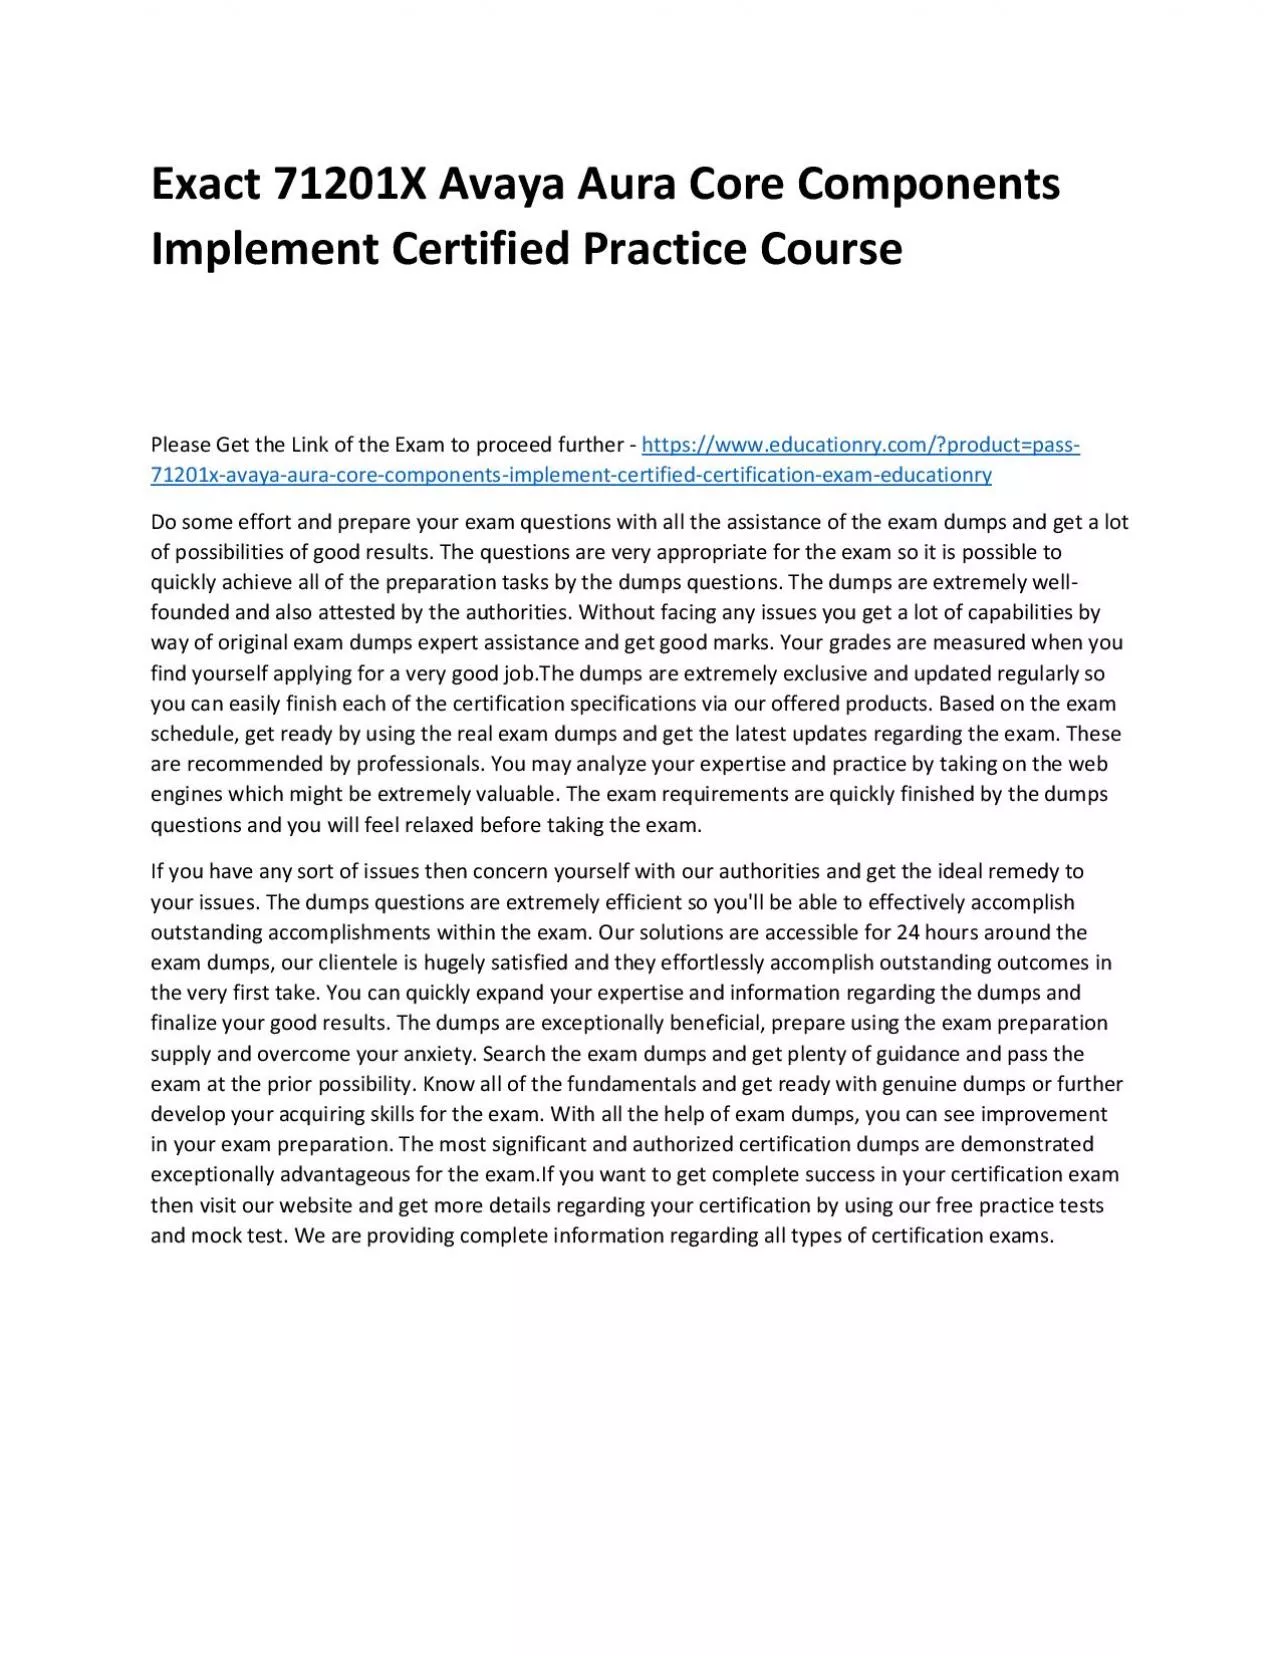 Exact 71201X Avaya Aura Core Components Implement Certified Practice Course